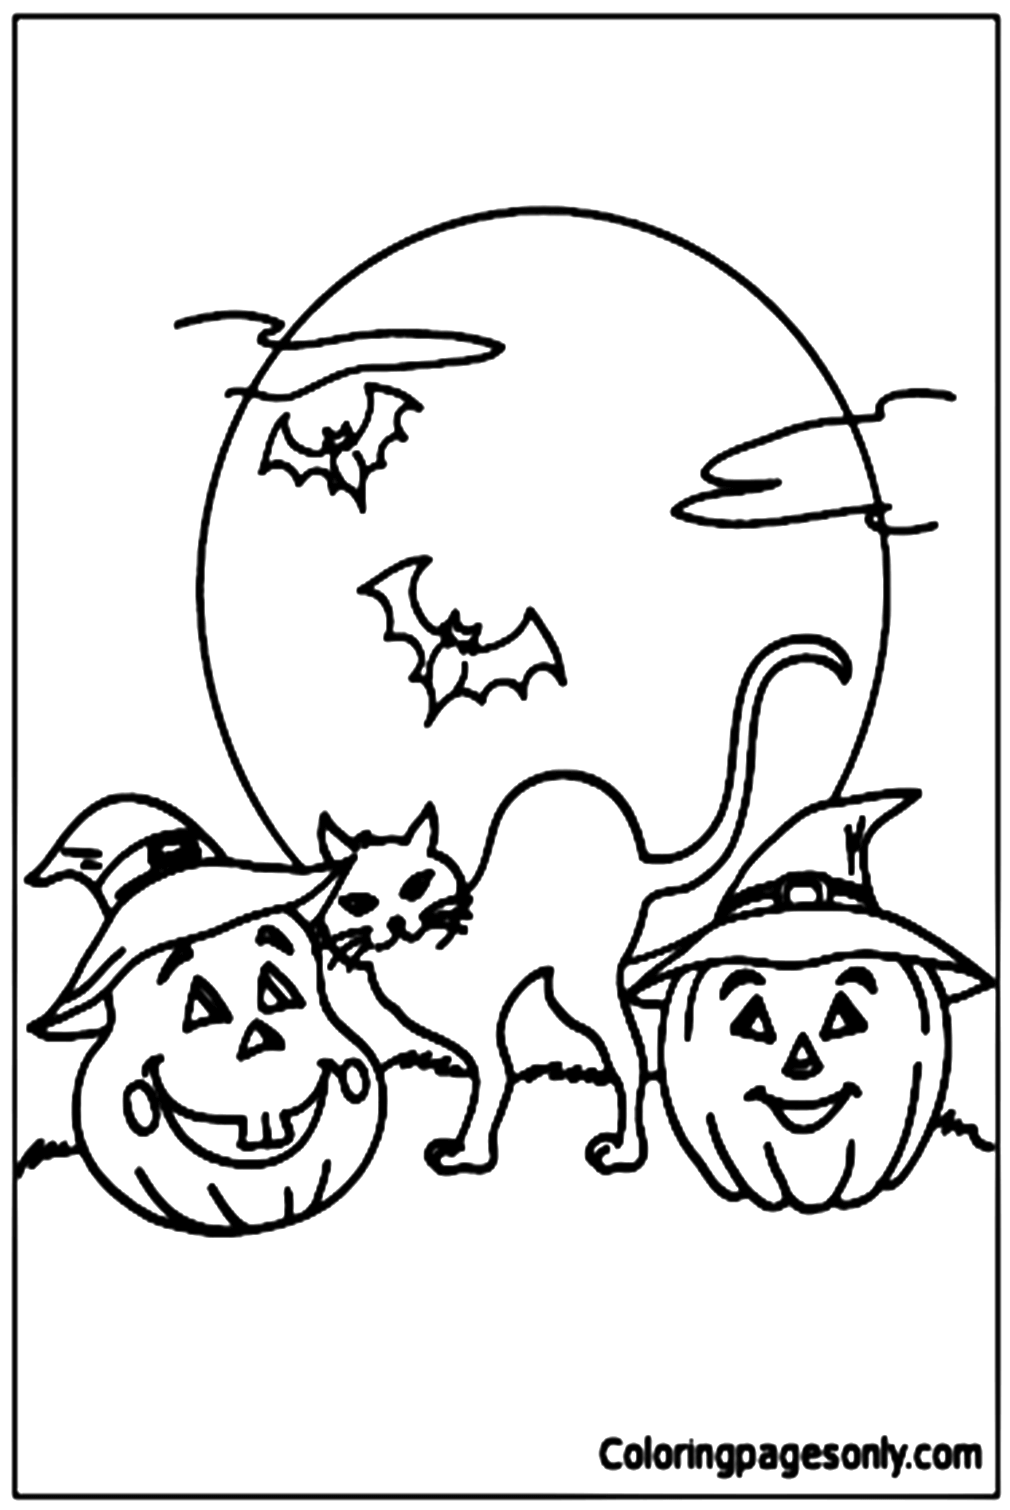 Bats, Black Cat And Pumpkin Coloring Page